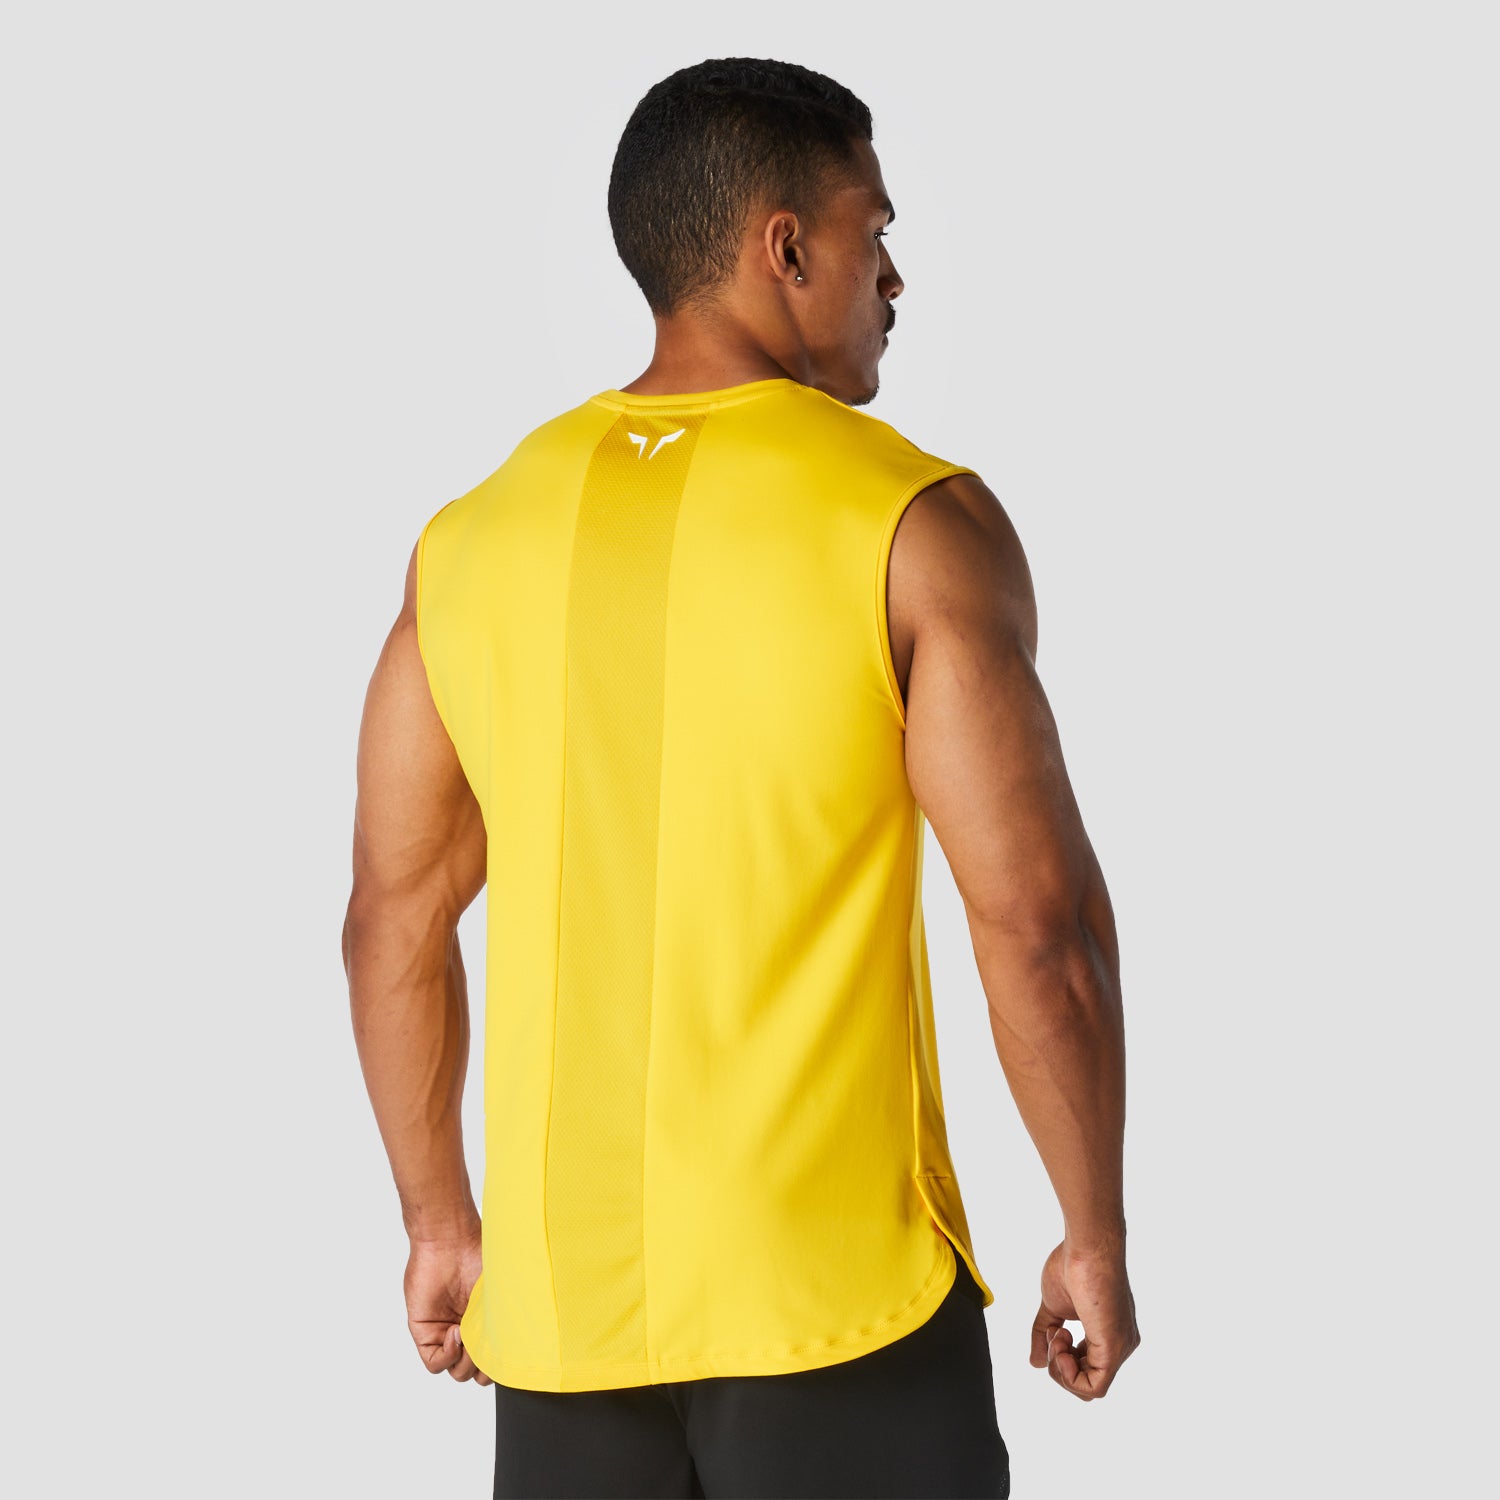 squatwolf-stringer-vests-for-men-warrior-tank-yellow-gym-wear